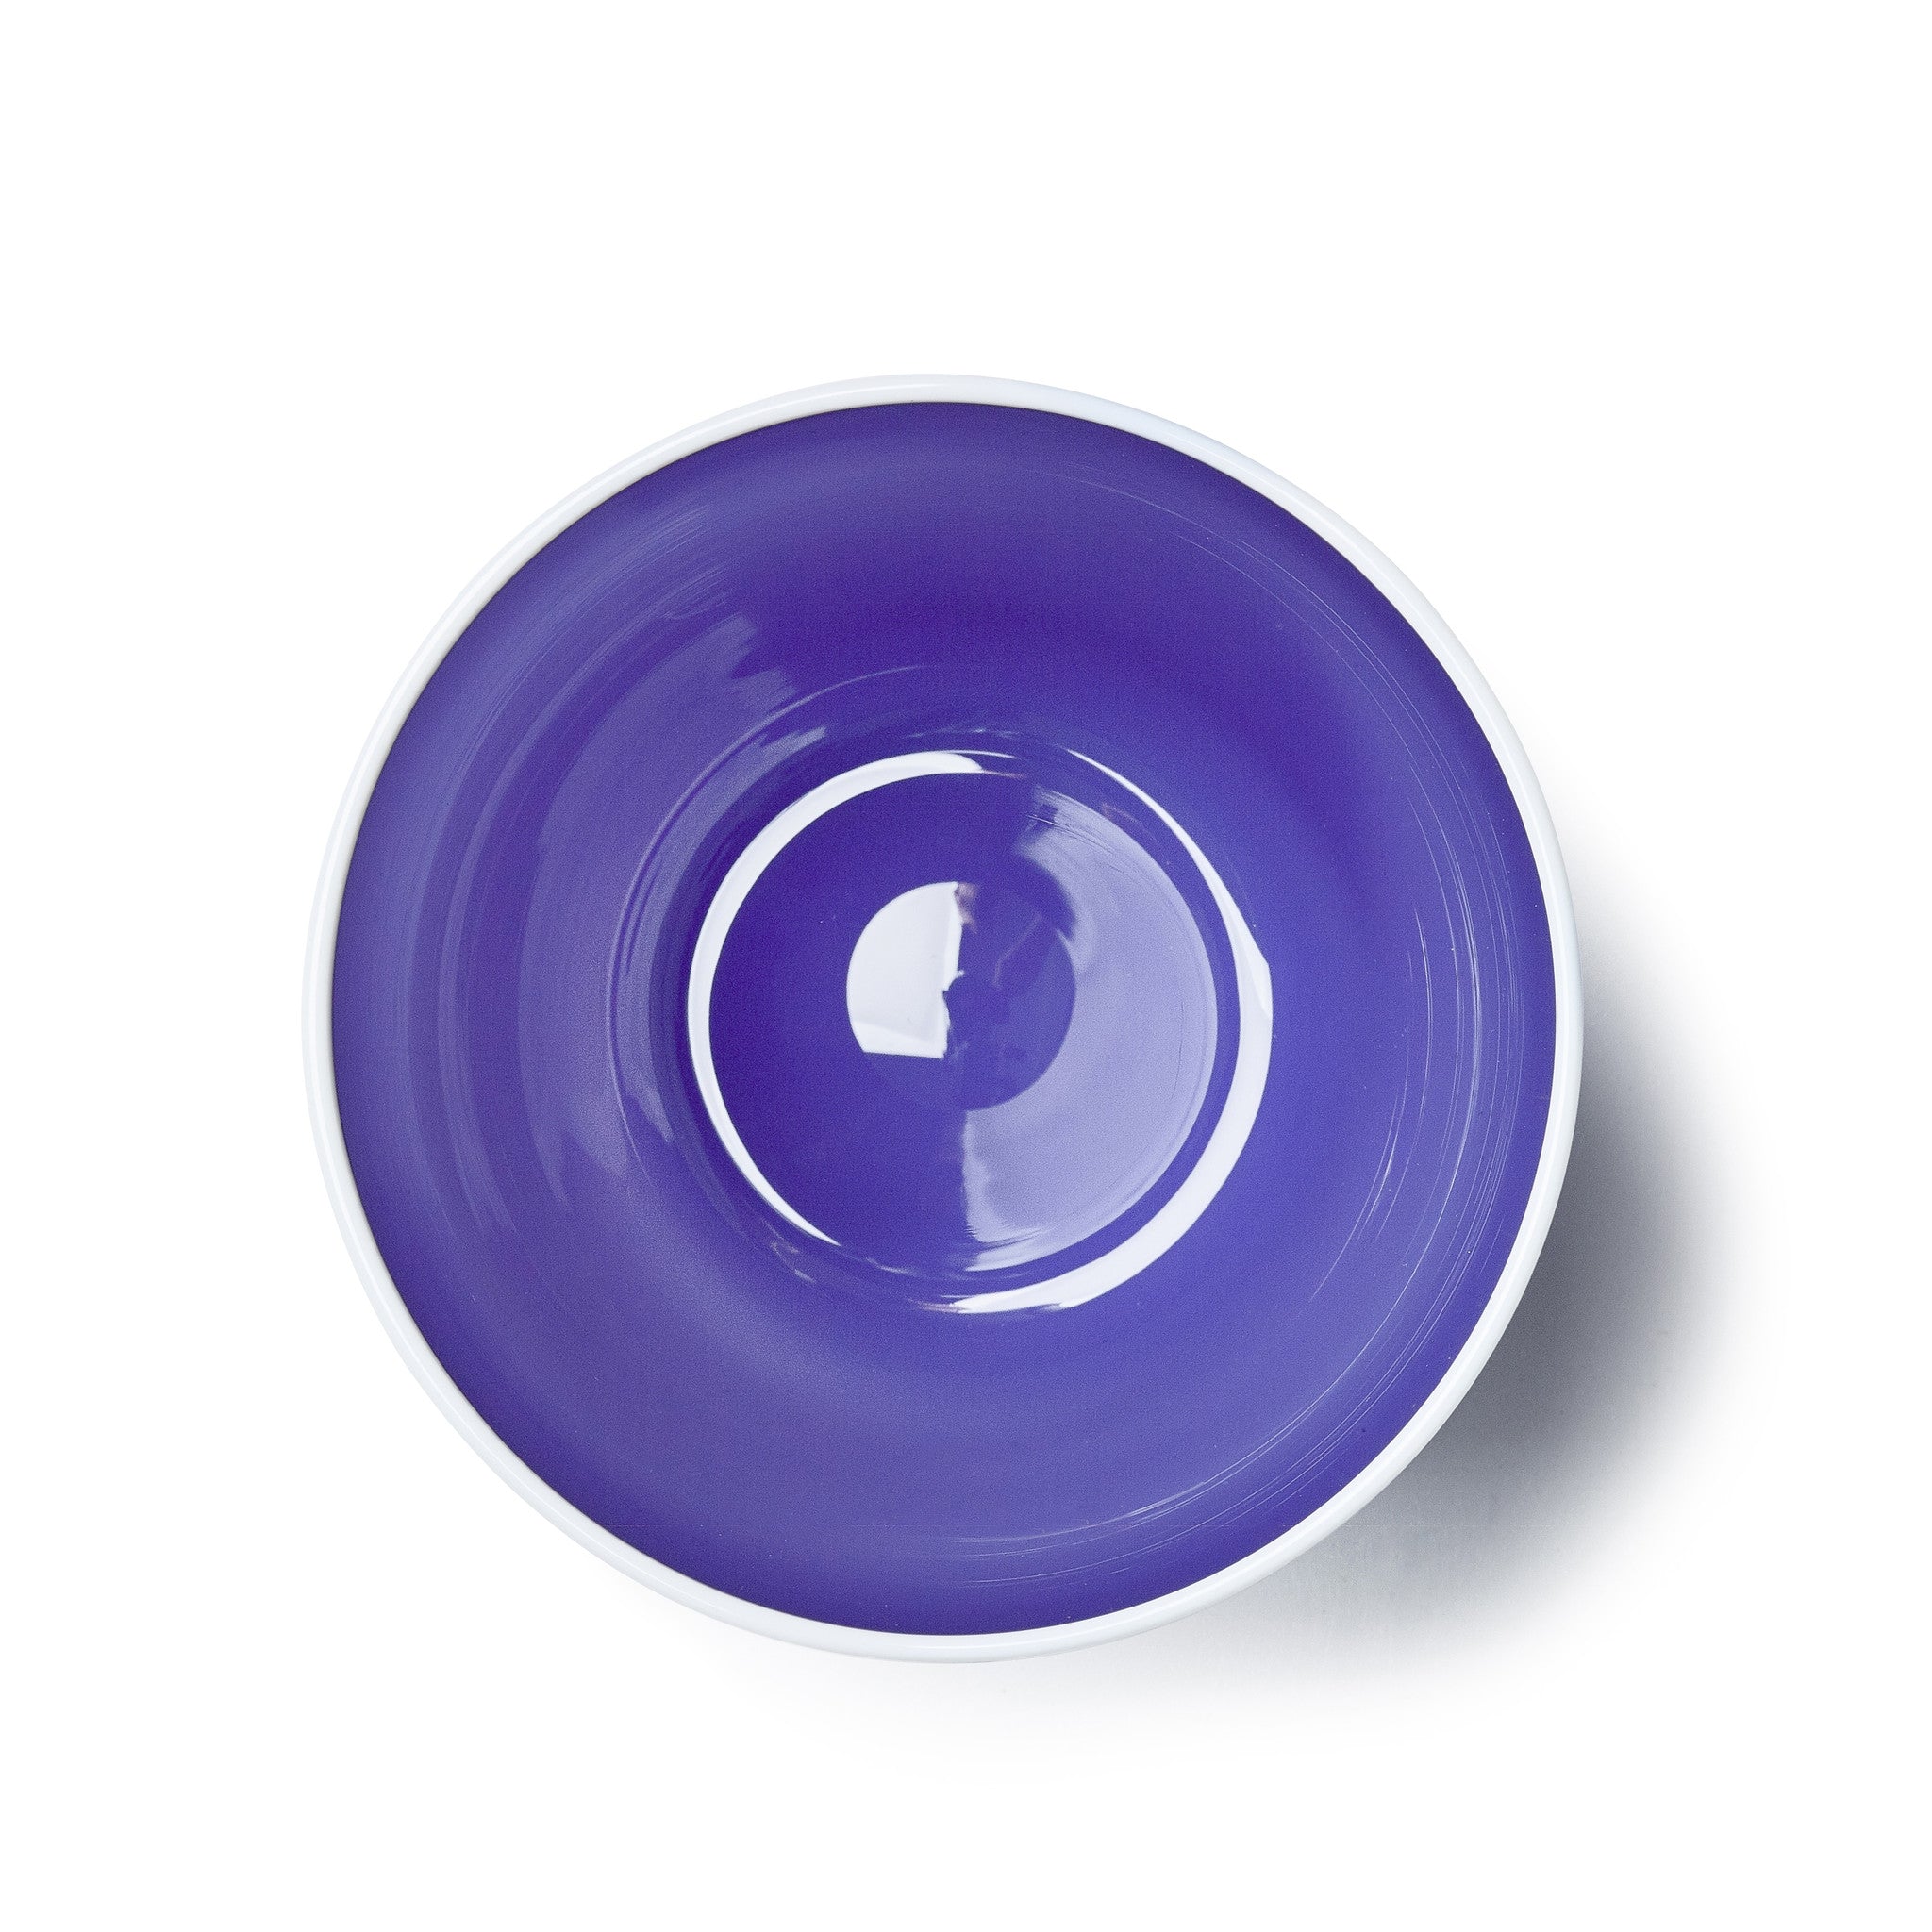 Handblown Bumba Glass in Purple, 30cl